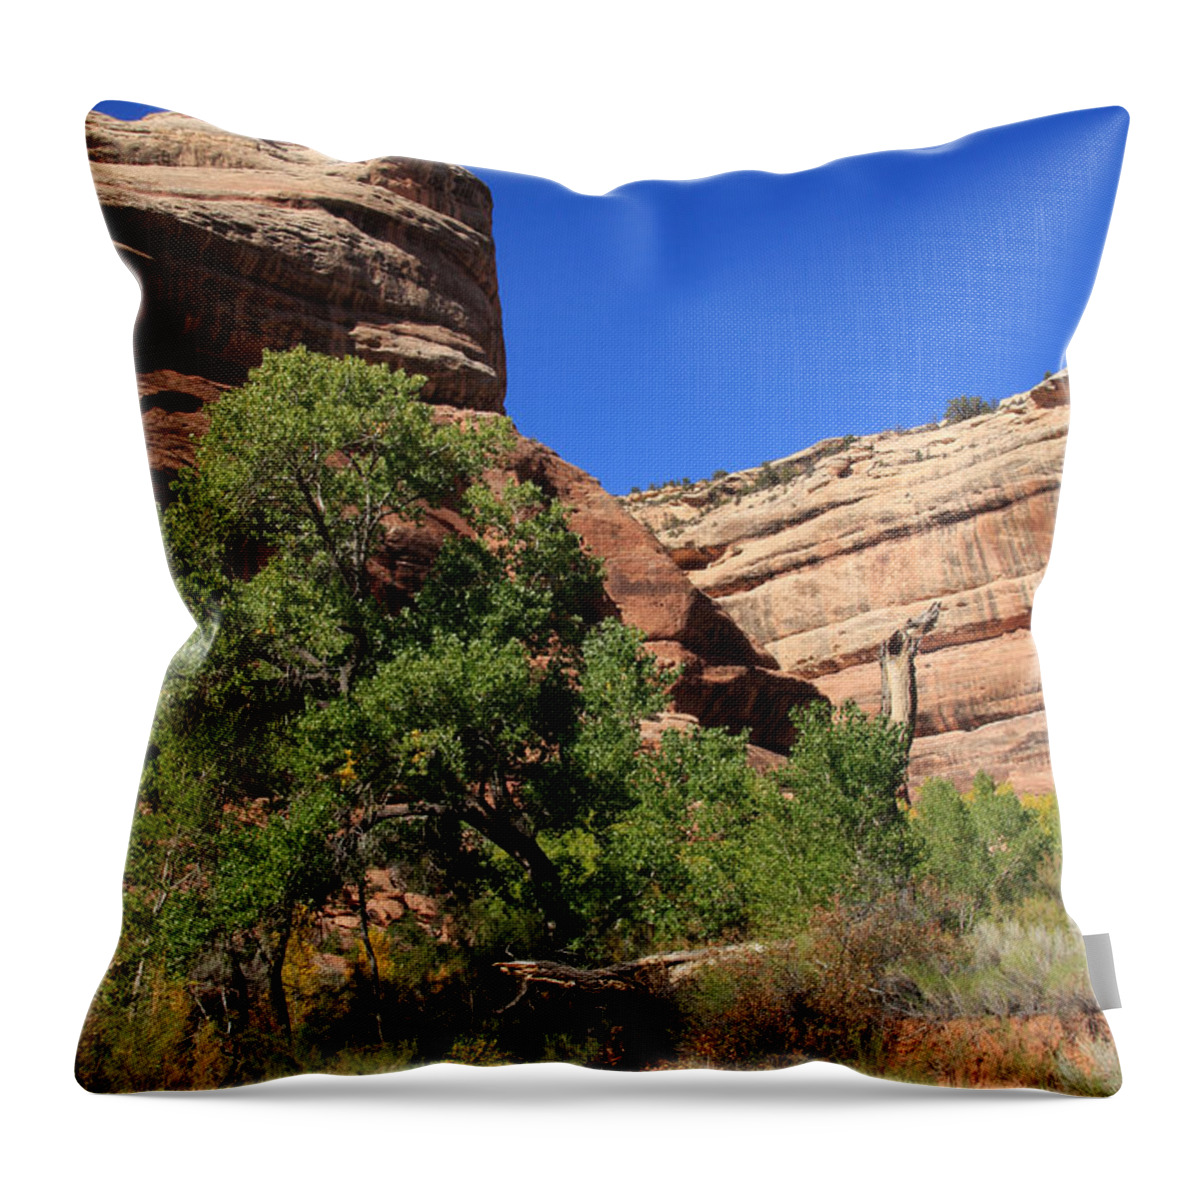 Aidan Moran Throw Pillow featuring the photograph Grand Gulch Canyon by Aidan Moran